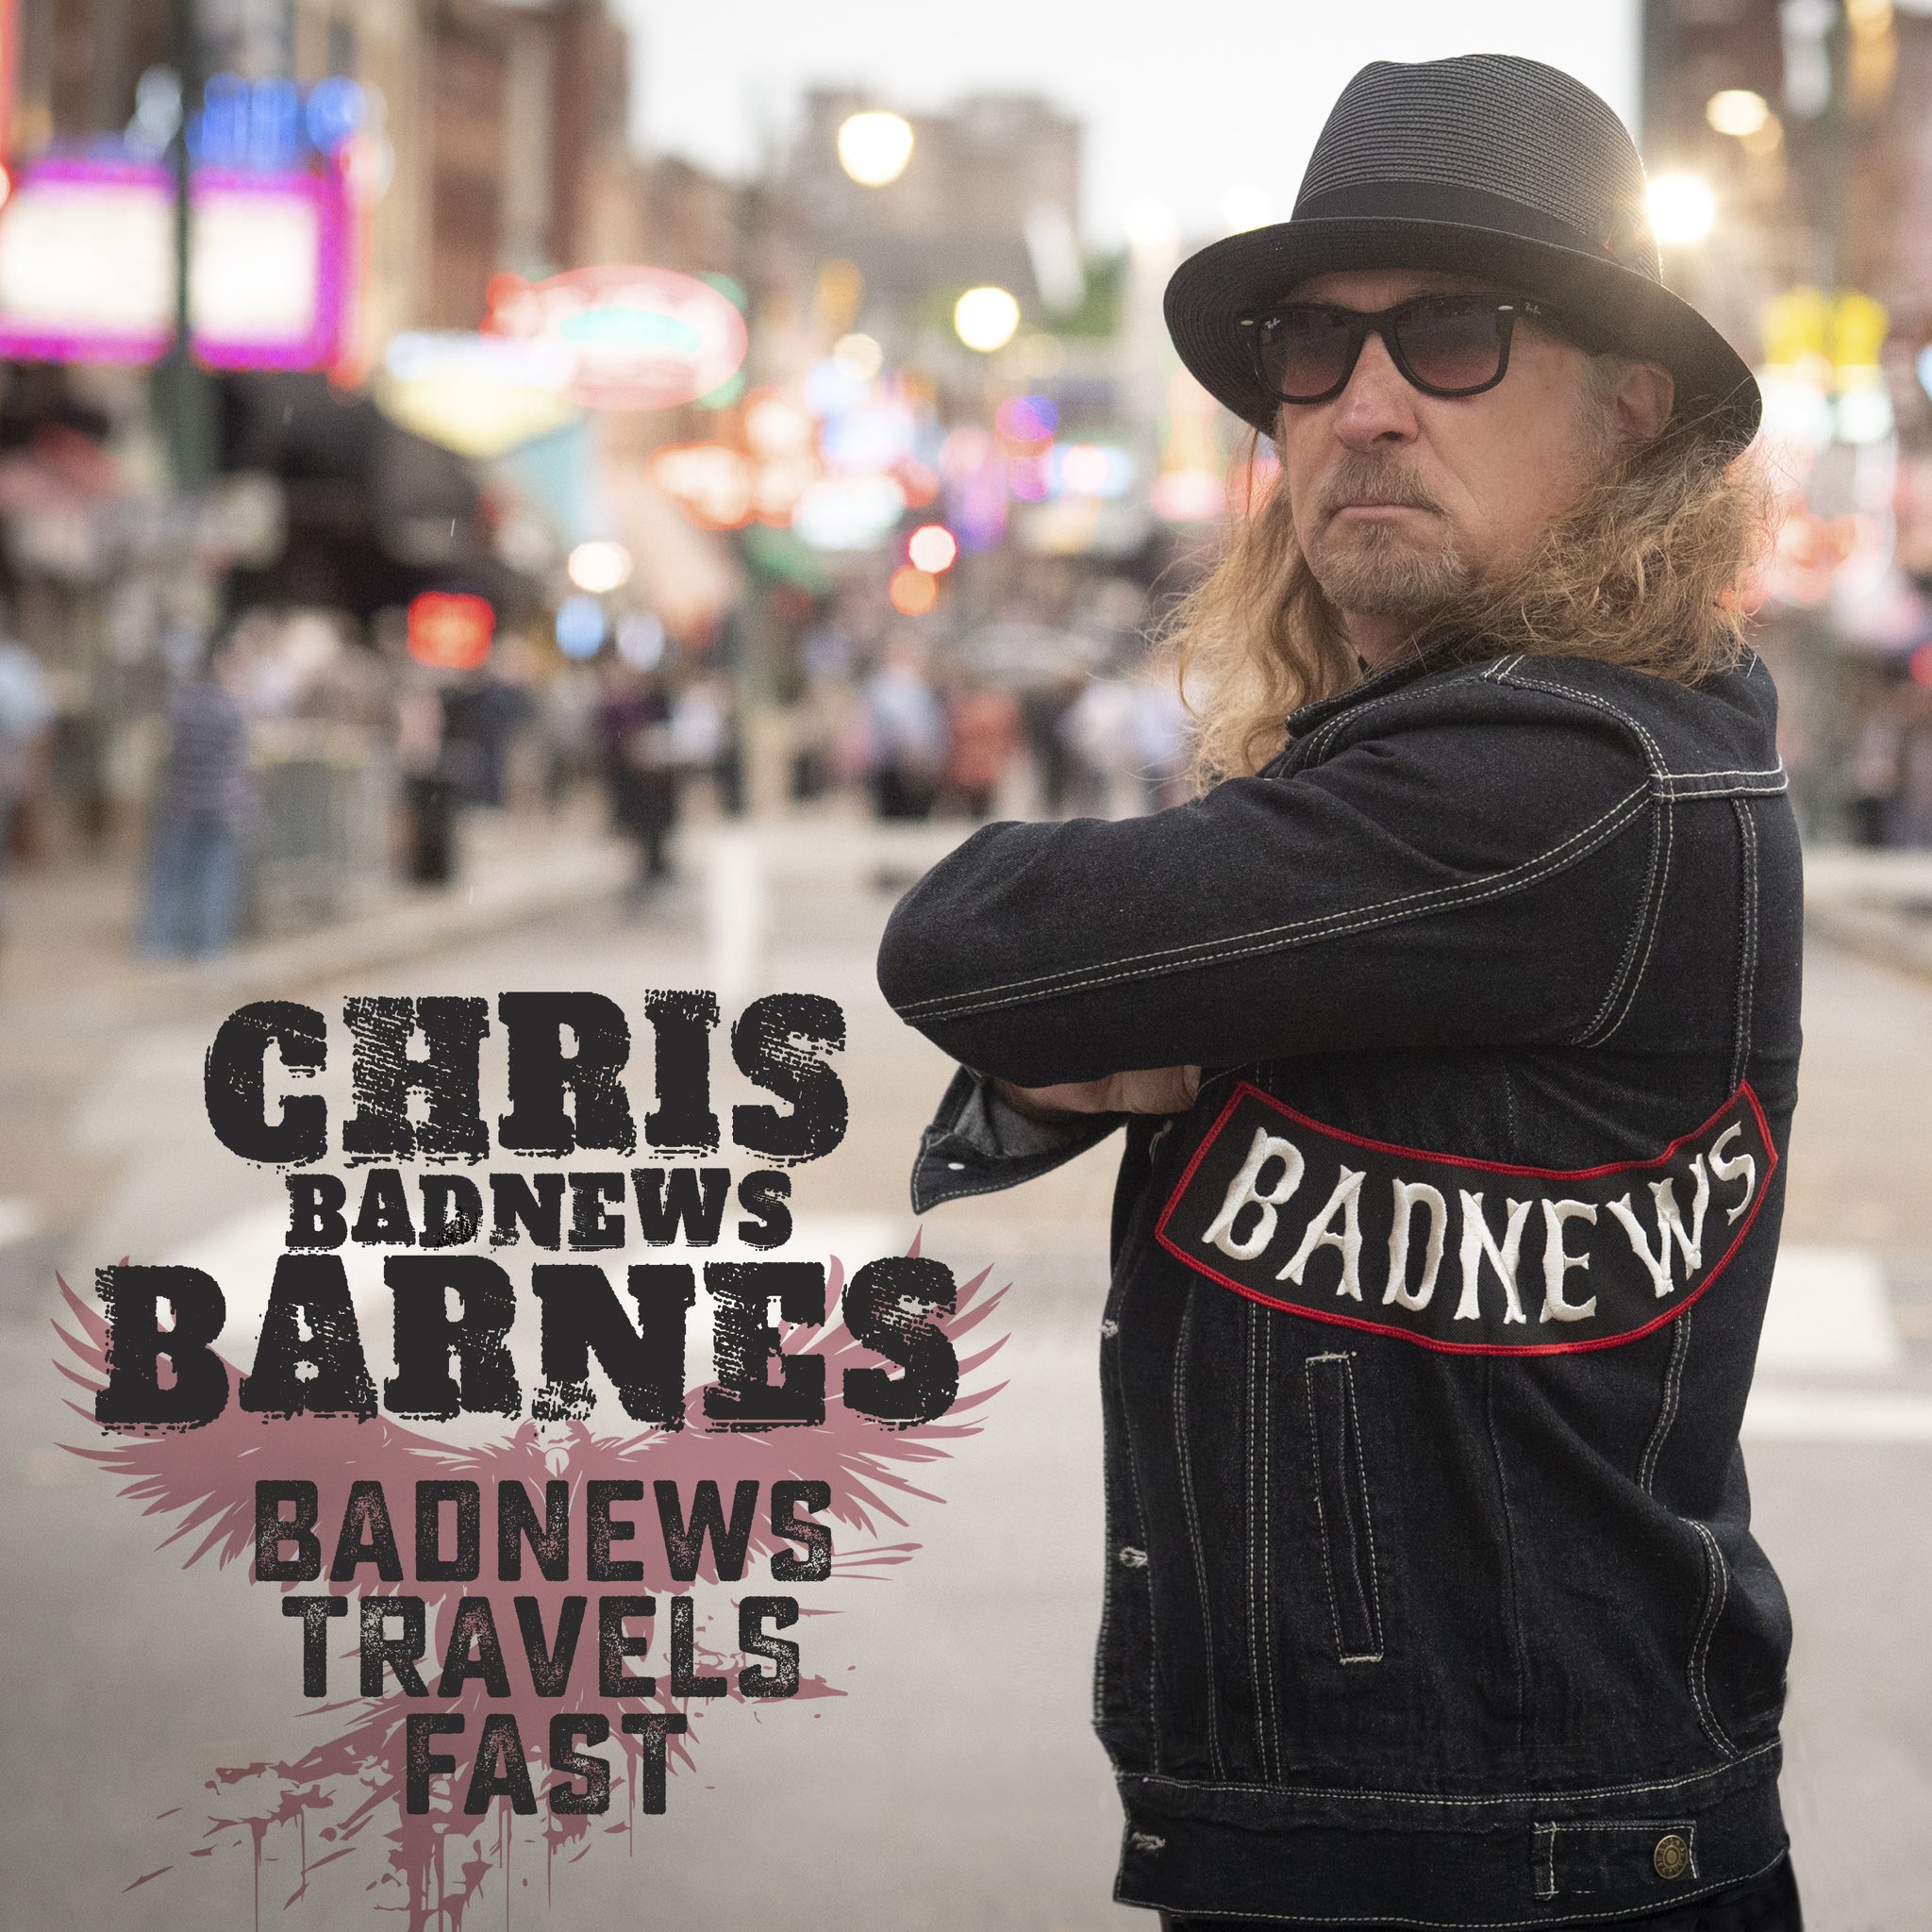 Chris BadNews Barnes - BadNews Travels Fast